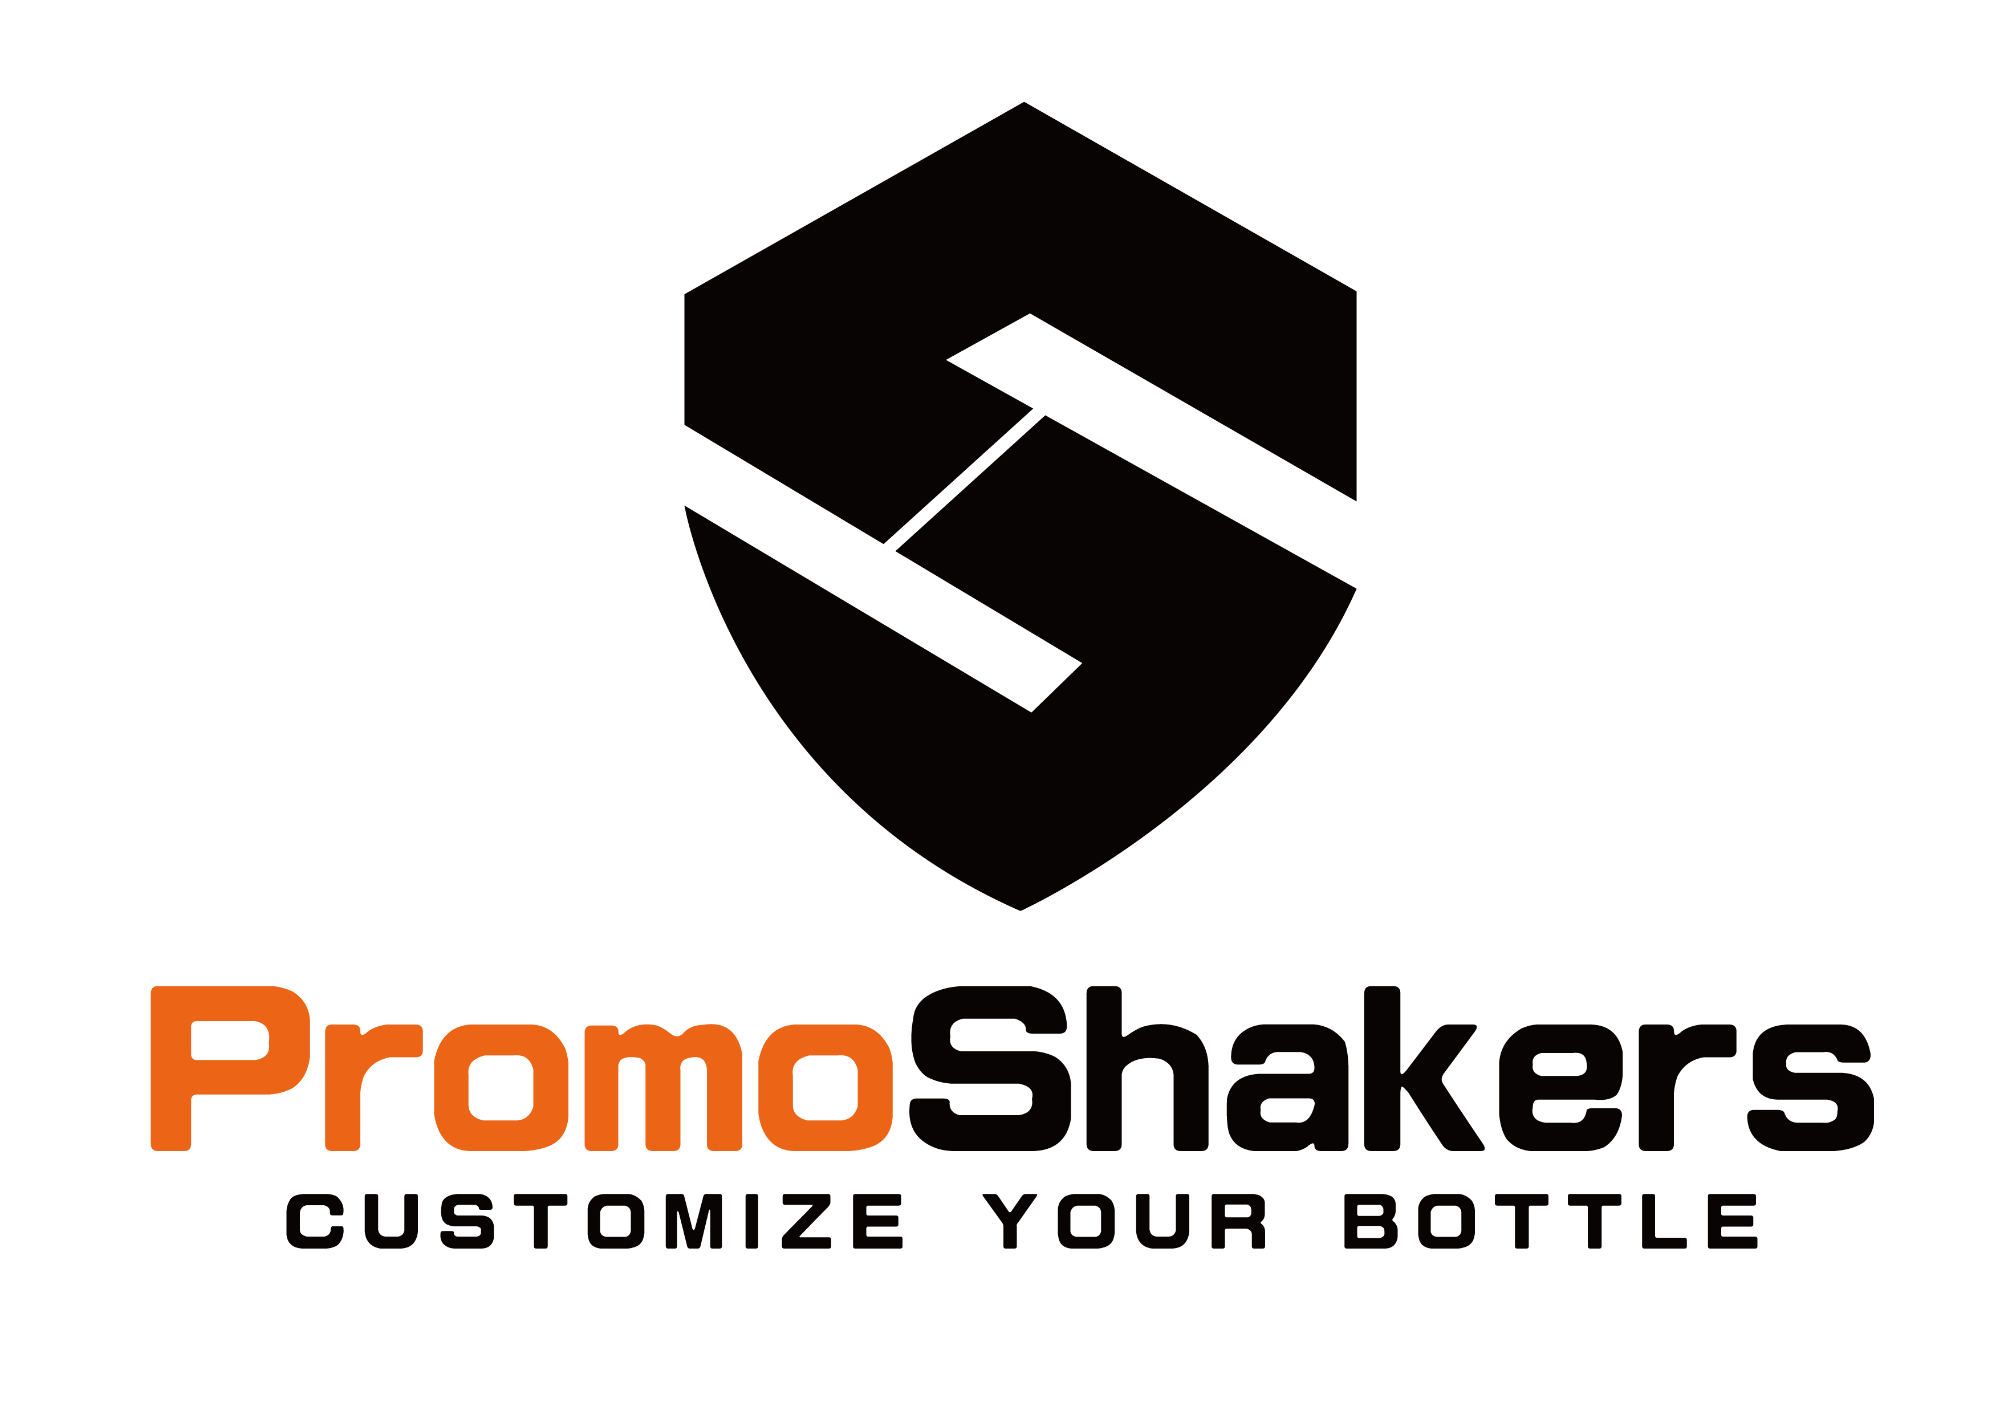 www.promoshakers.com